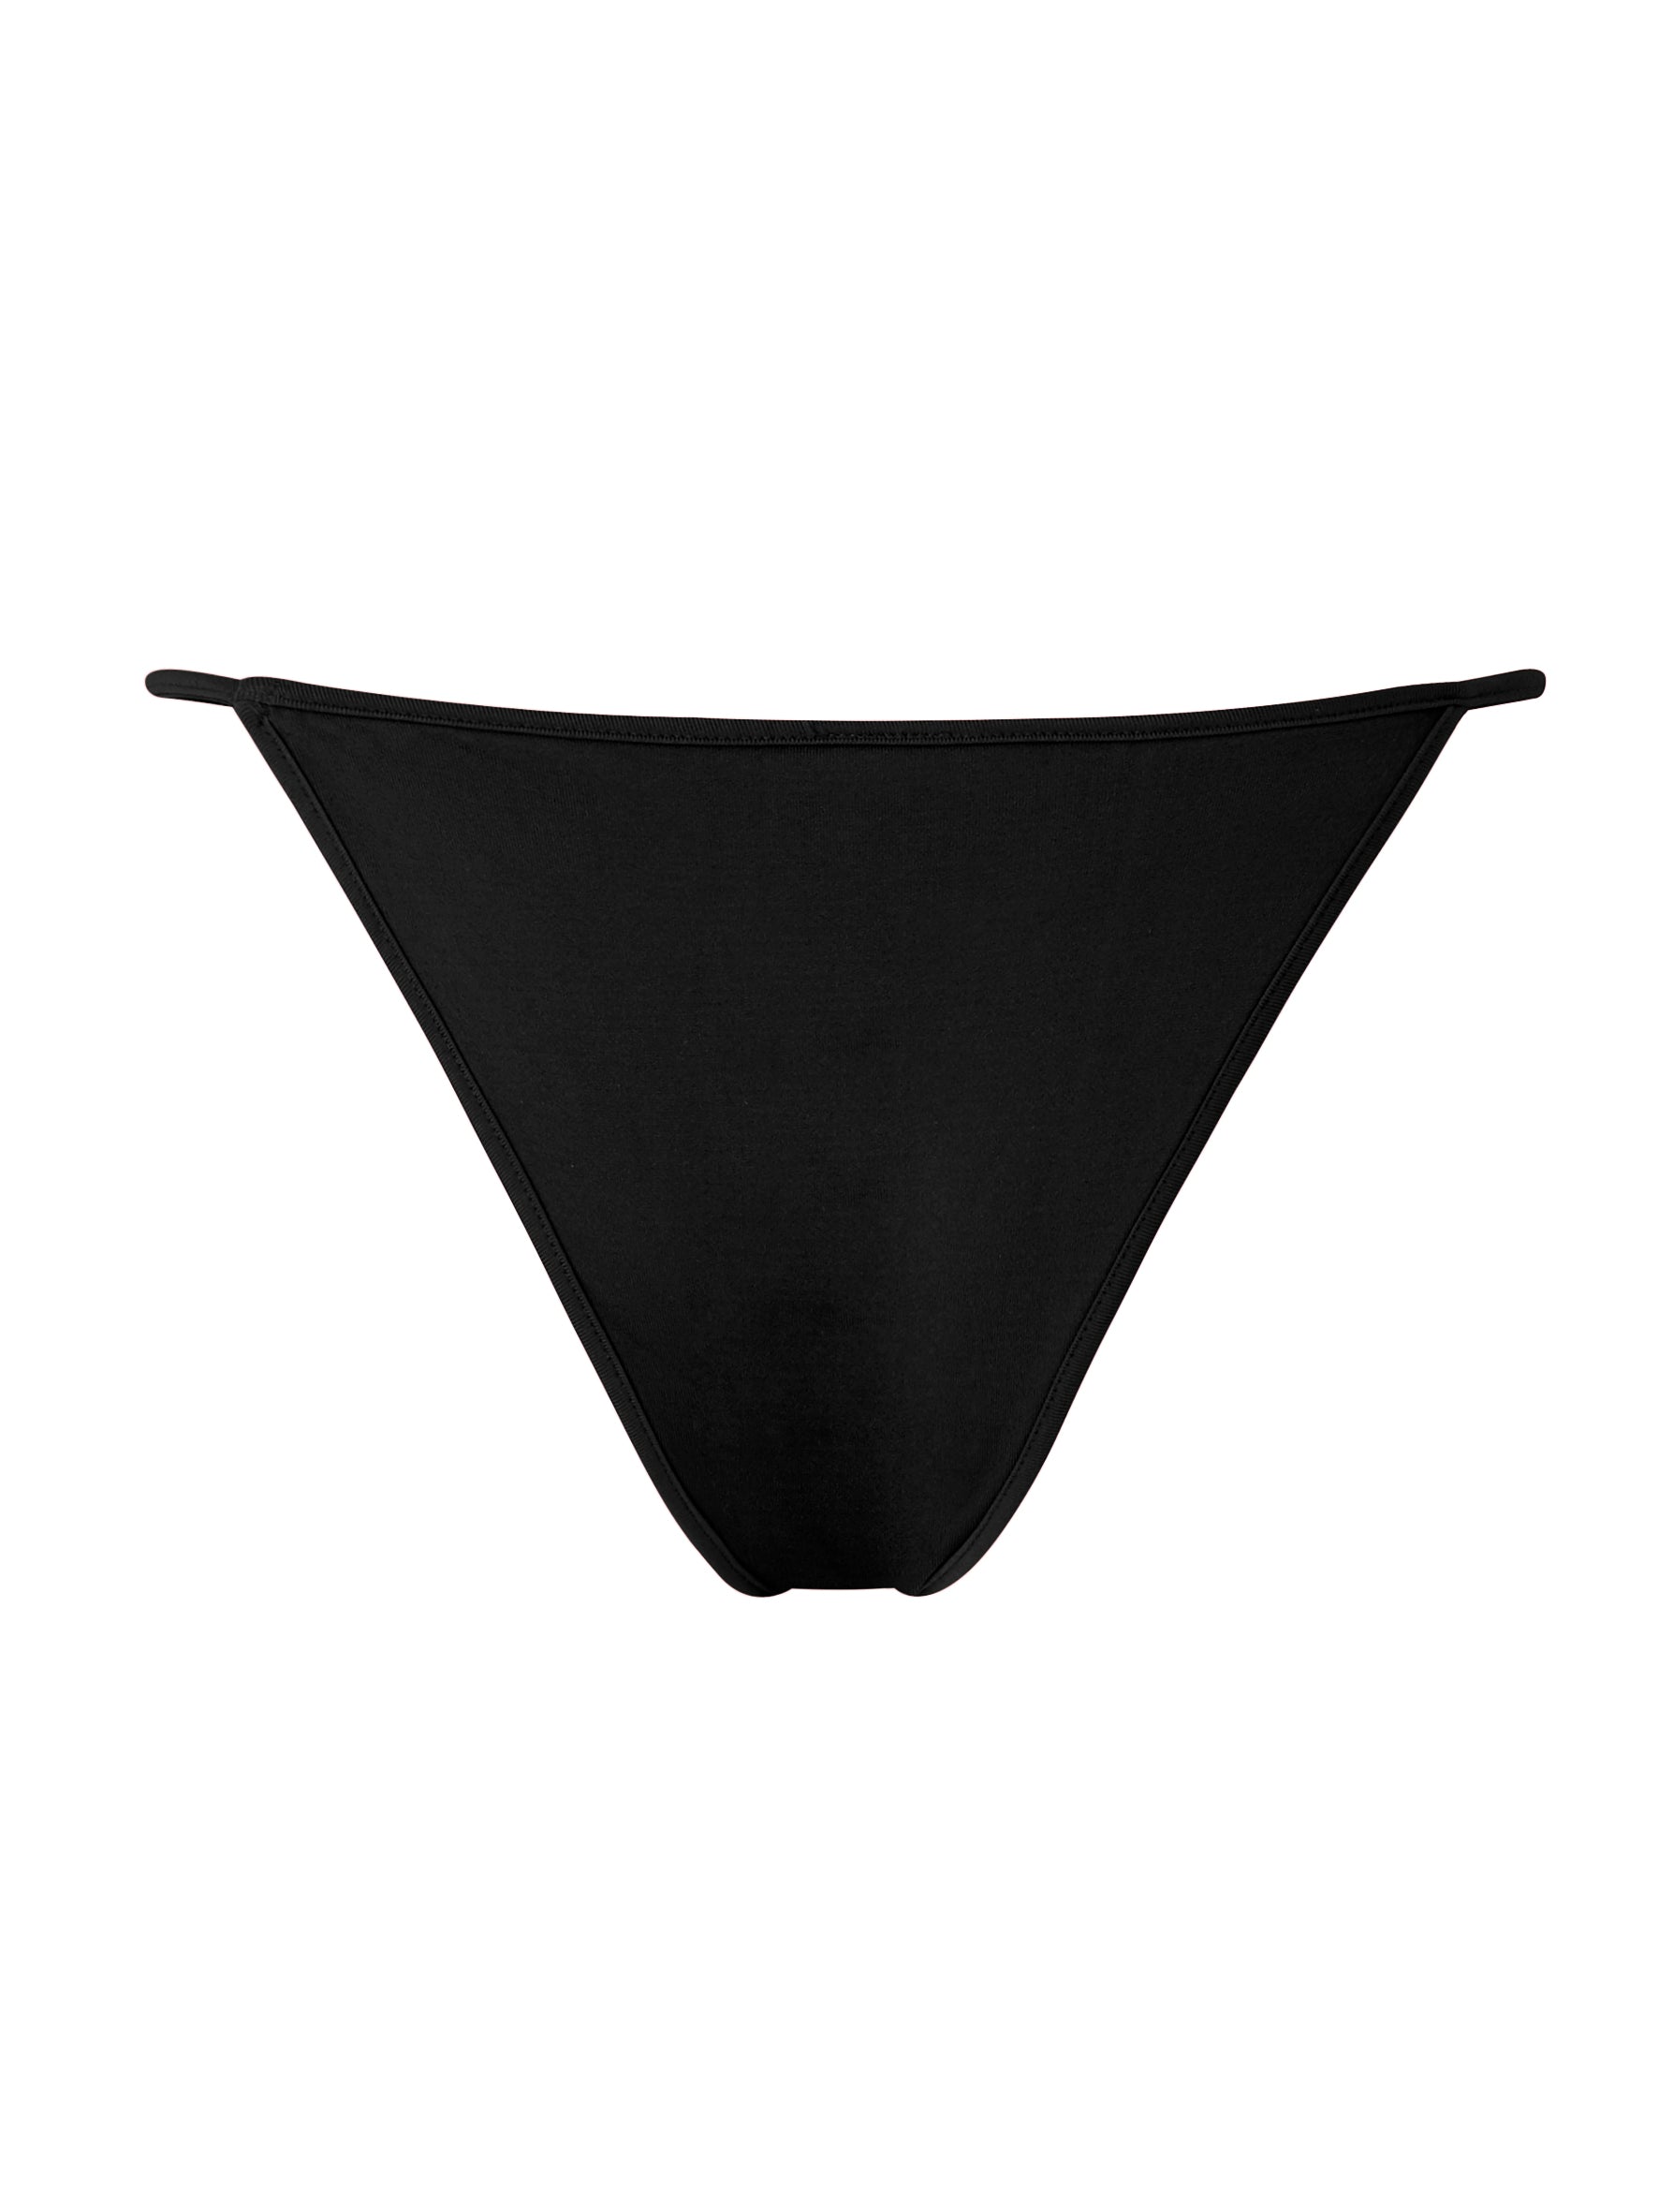 ZESTFUL Bikini Bottoms | Black | Image 3